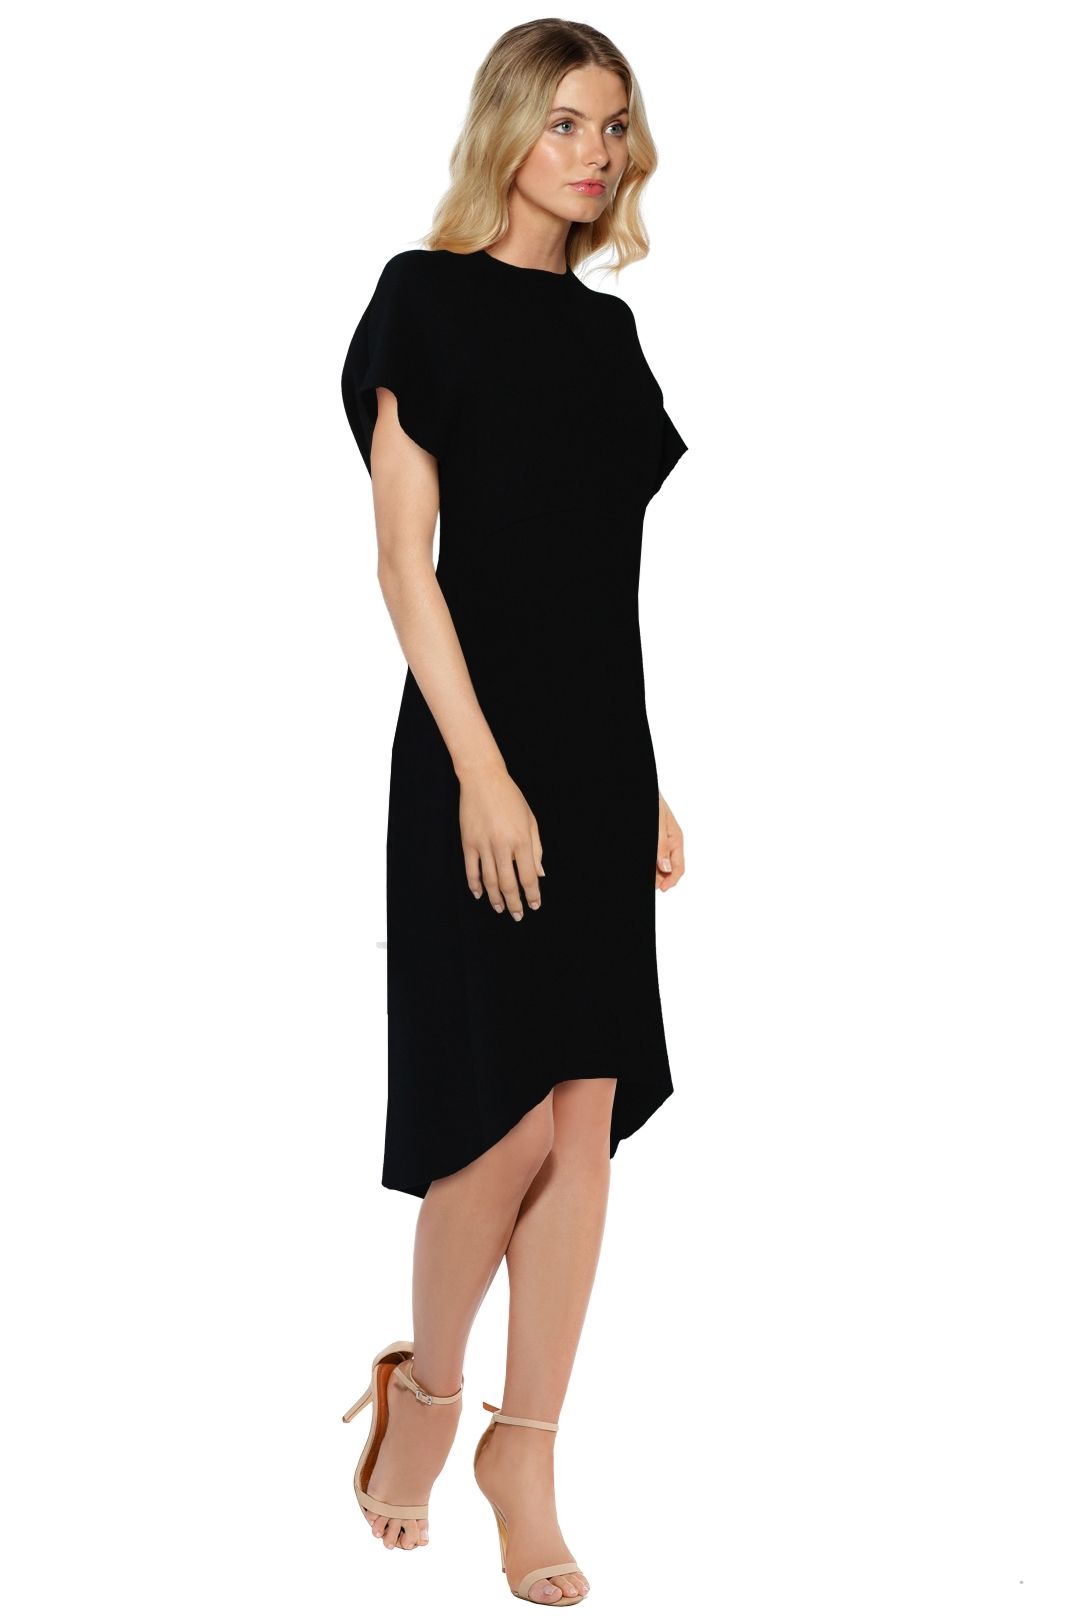 Scanlan Theodore - Black Crepe Knit Cocoon Dress - Black - Side